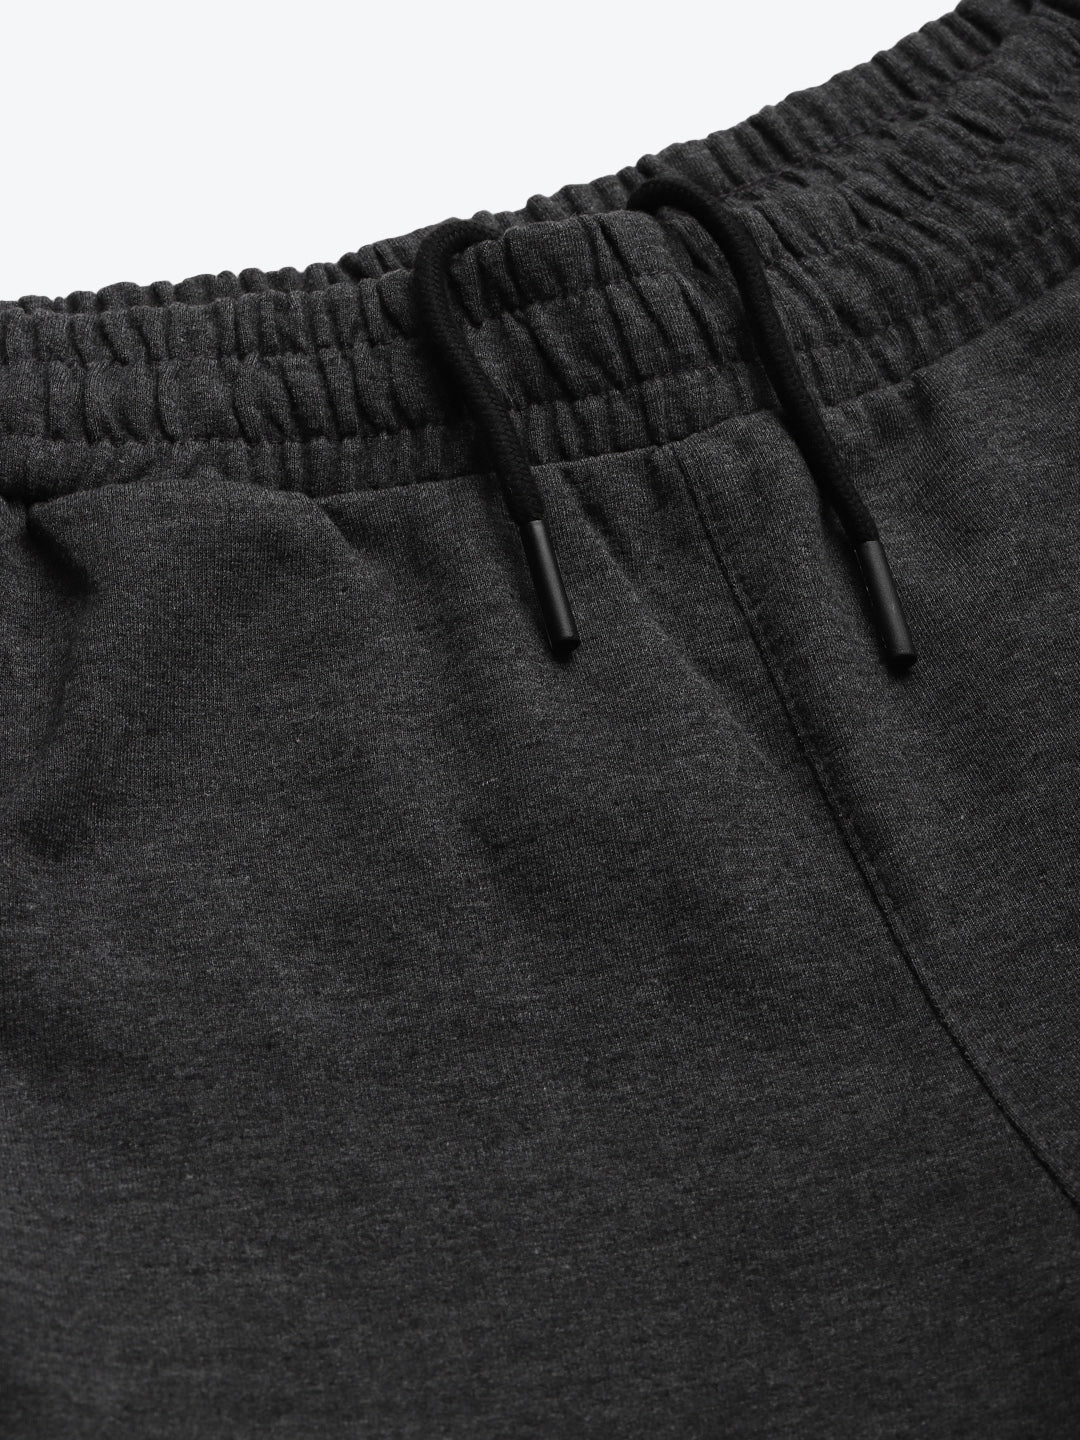 Alcis Men Black  Charcoal Grey Colourblocked Slim Fit Sports Shorts